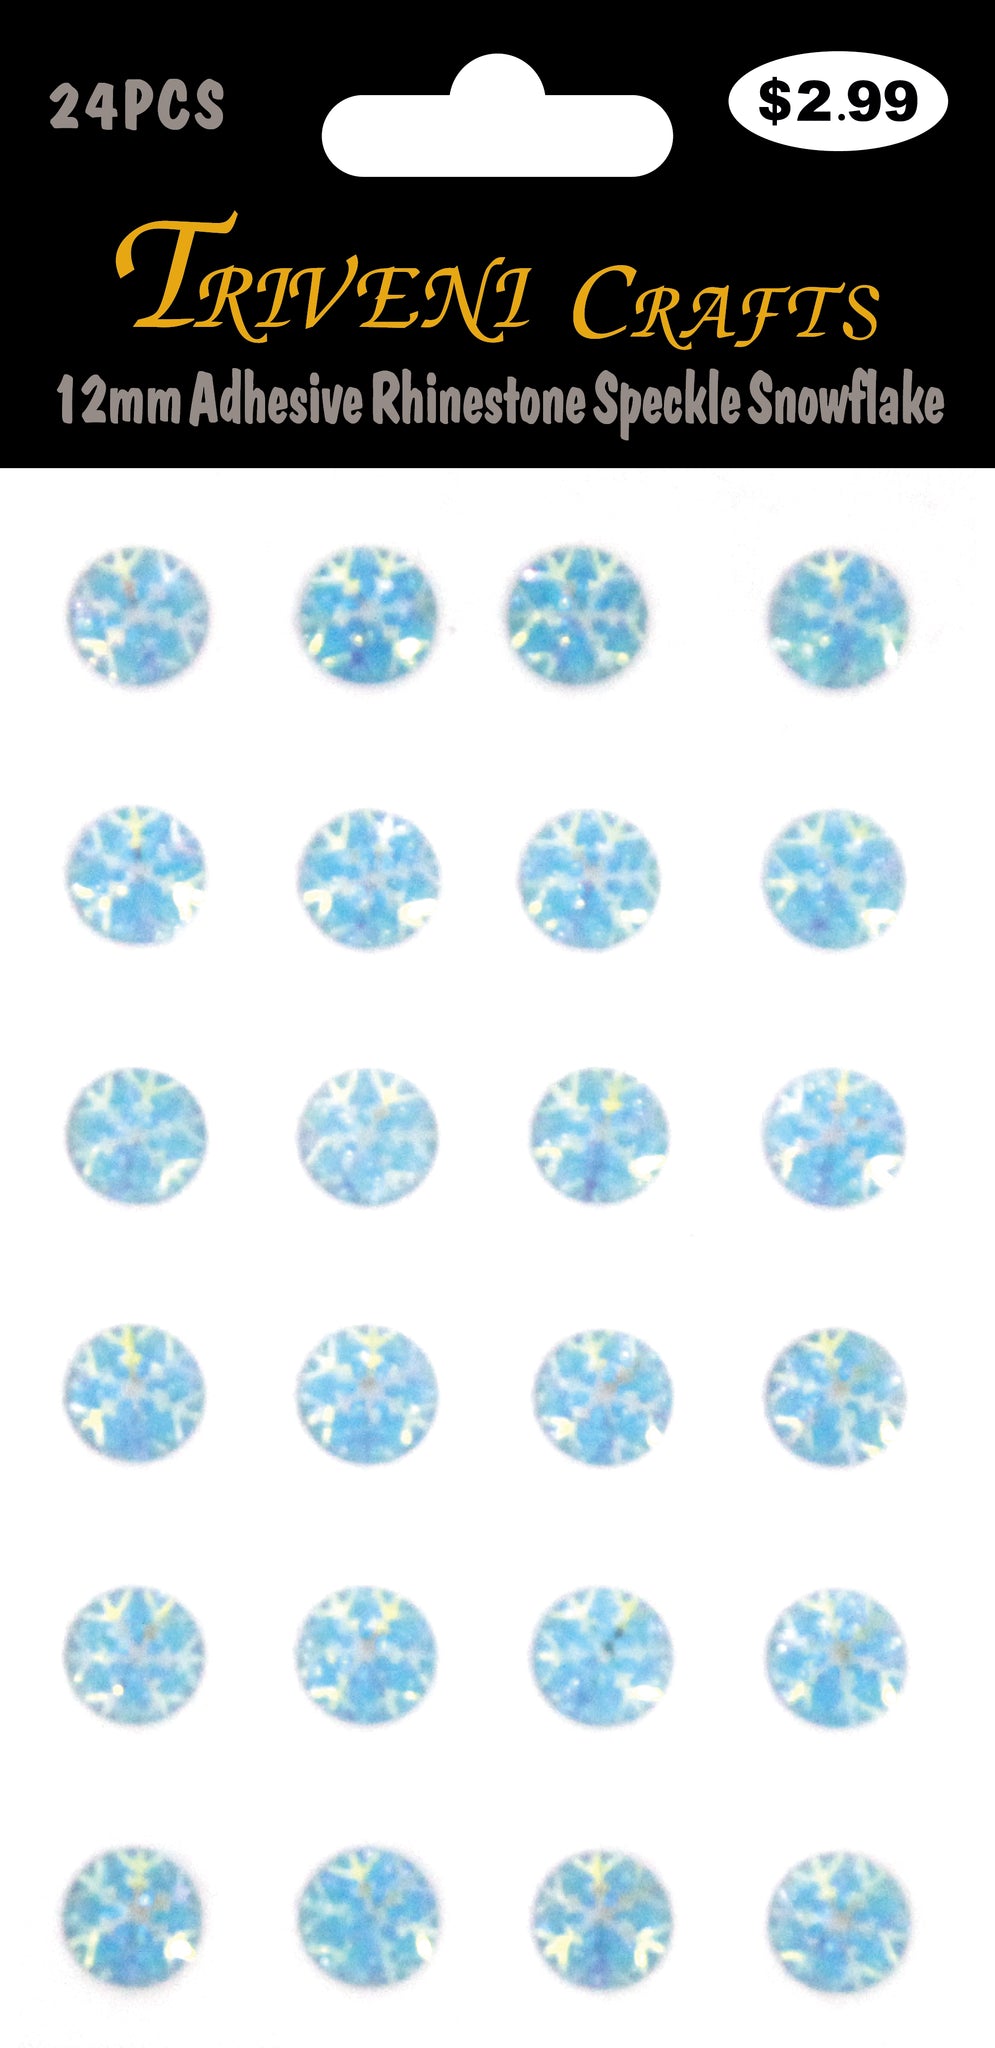 12mm Adhesive Rhinestone Speckle Snowflake - Blue Ice